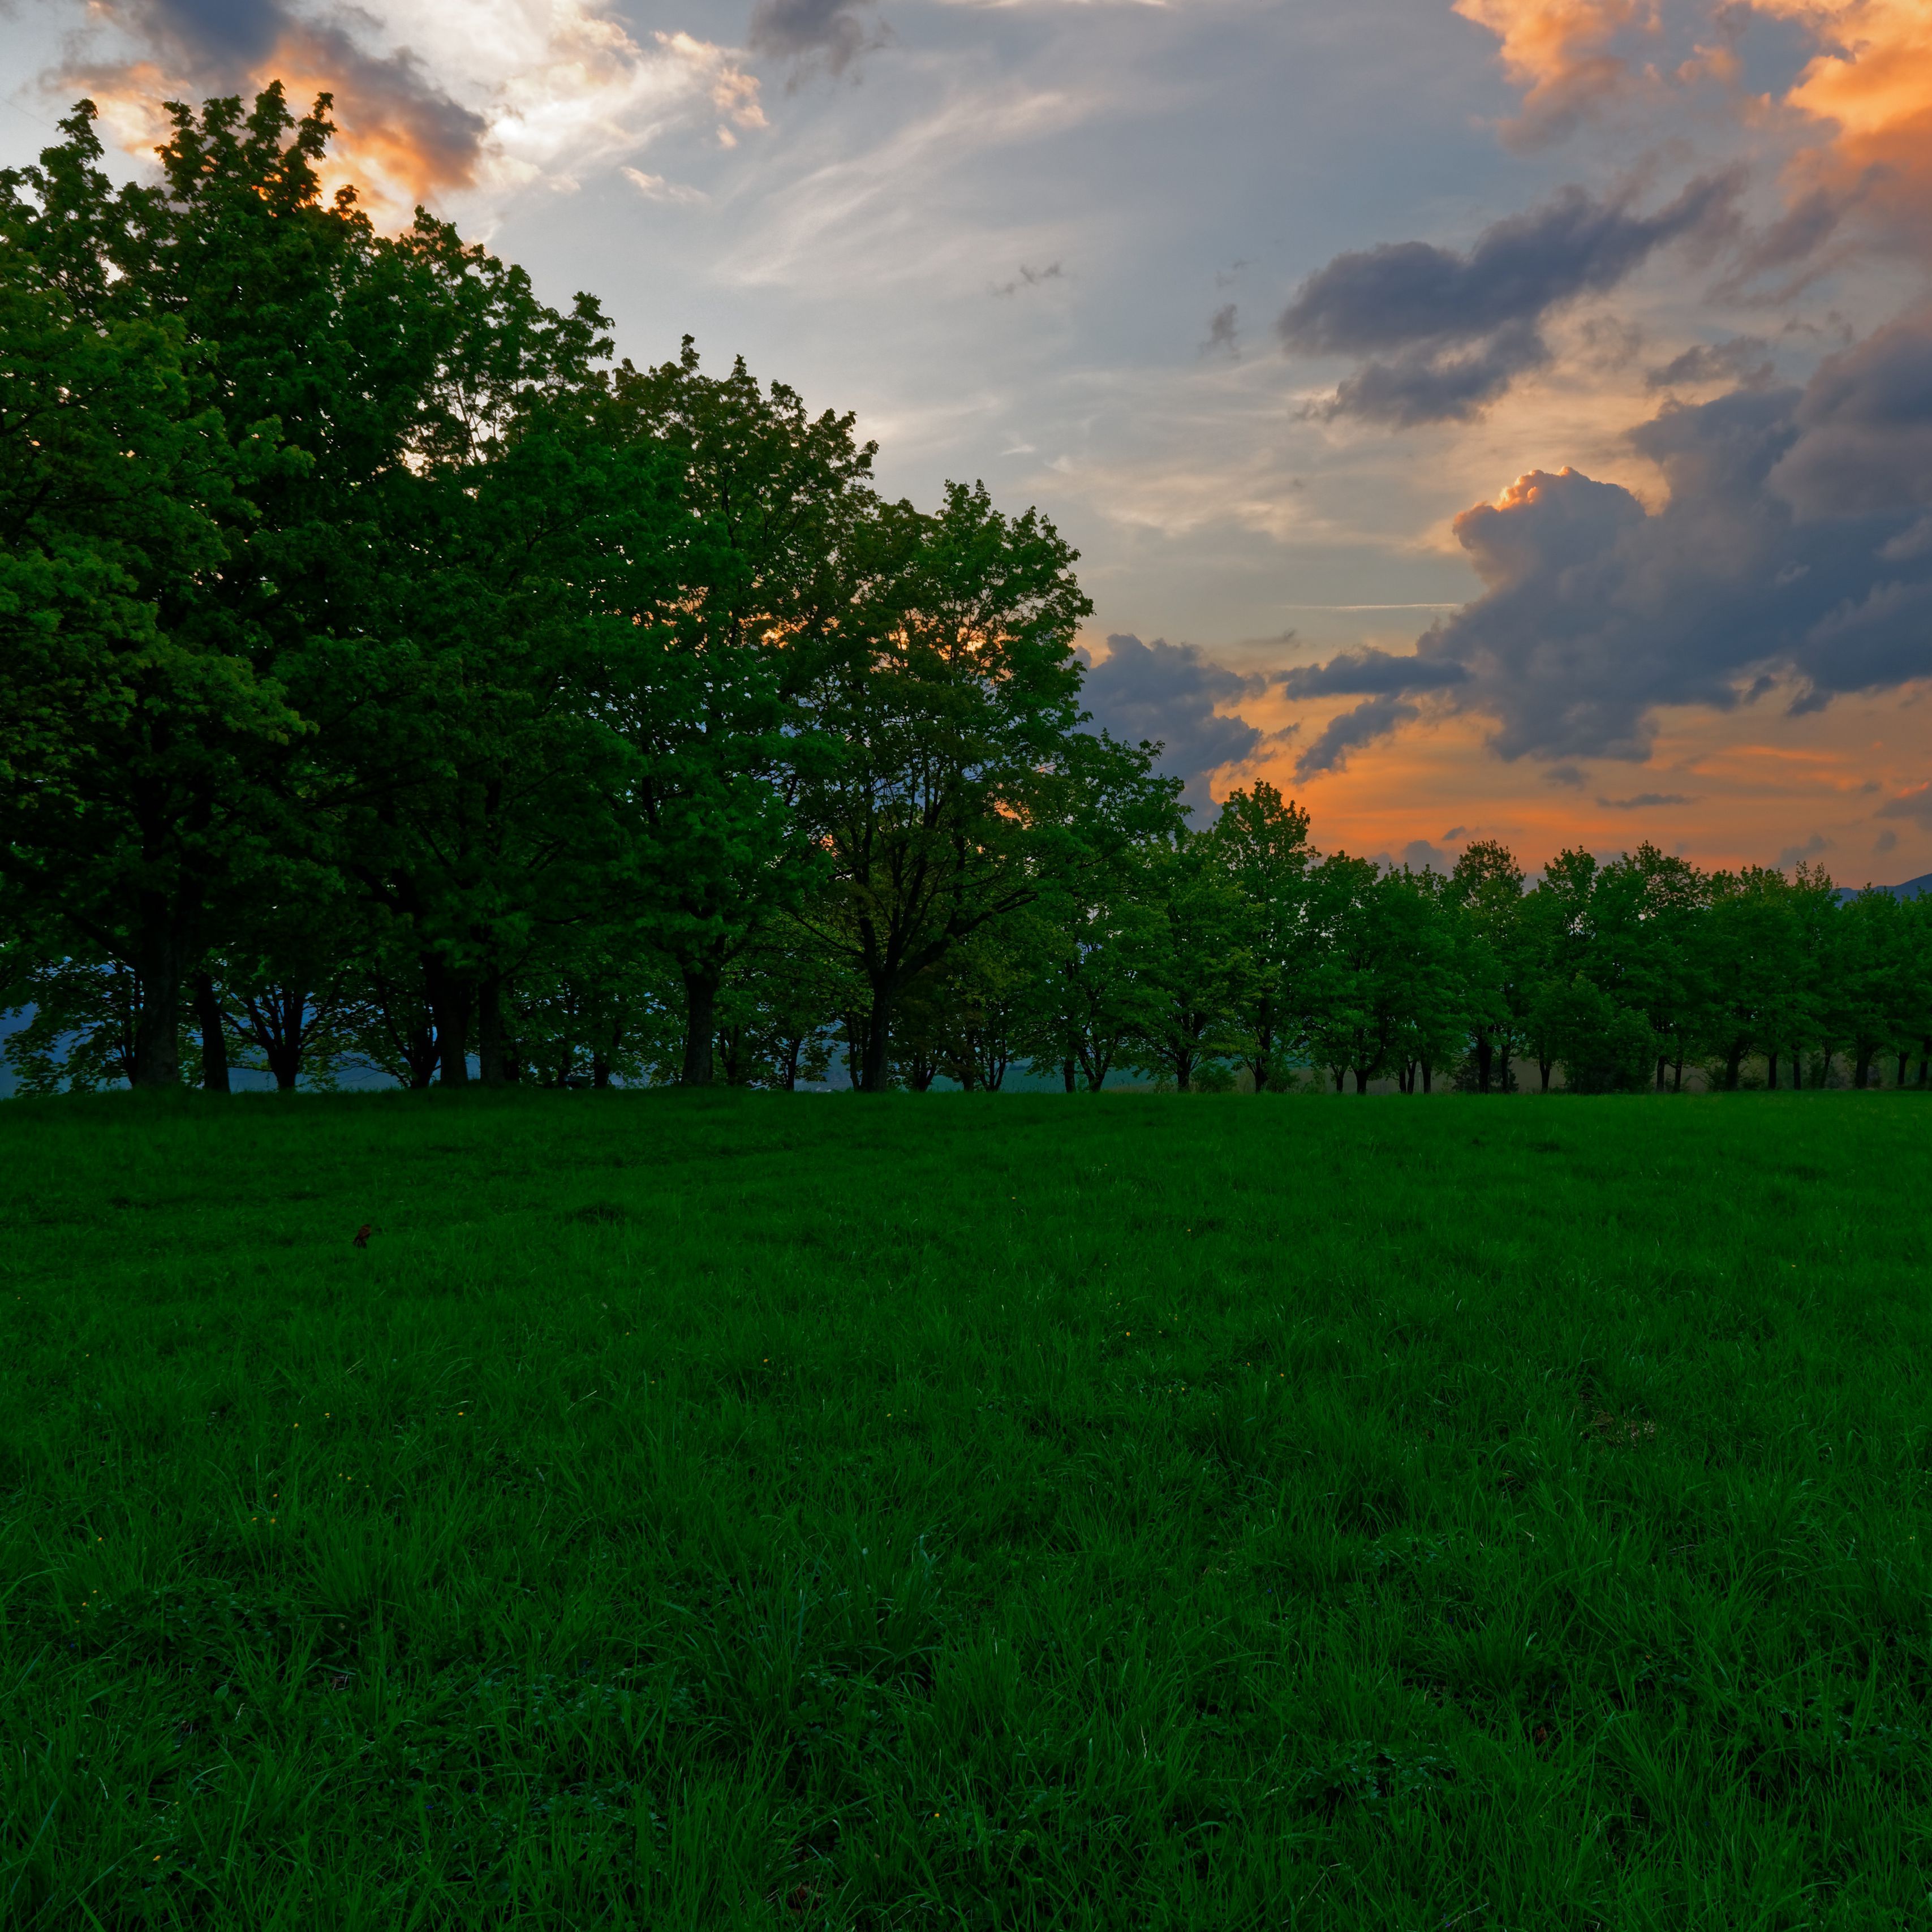 Download wallpaper 3415x3415 sunset, meadow, grass, trees ipad pro